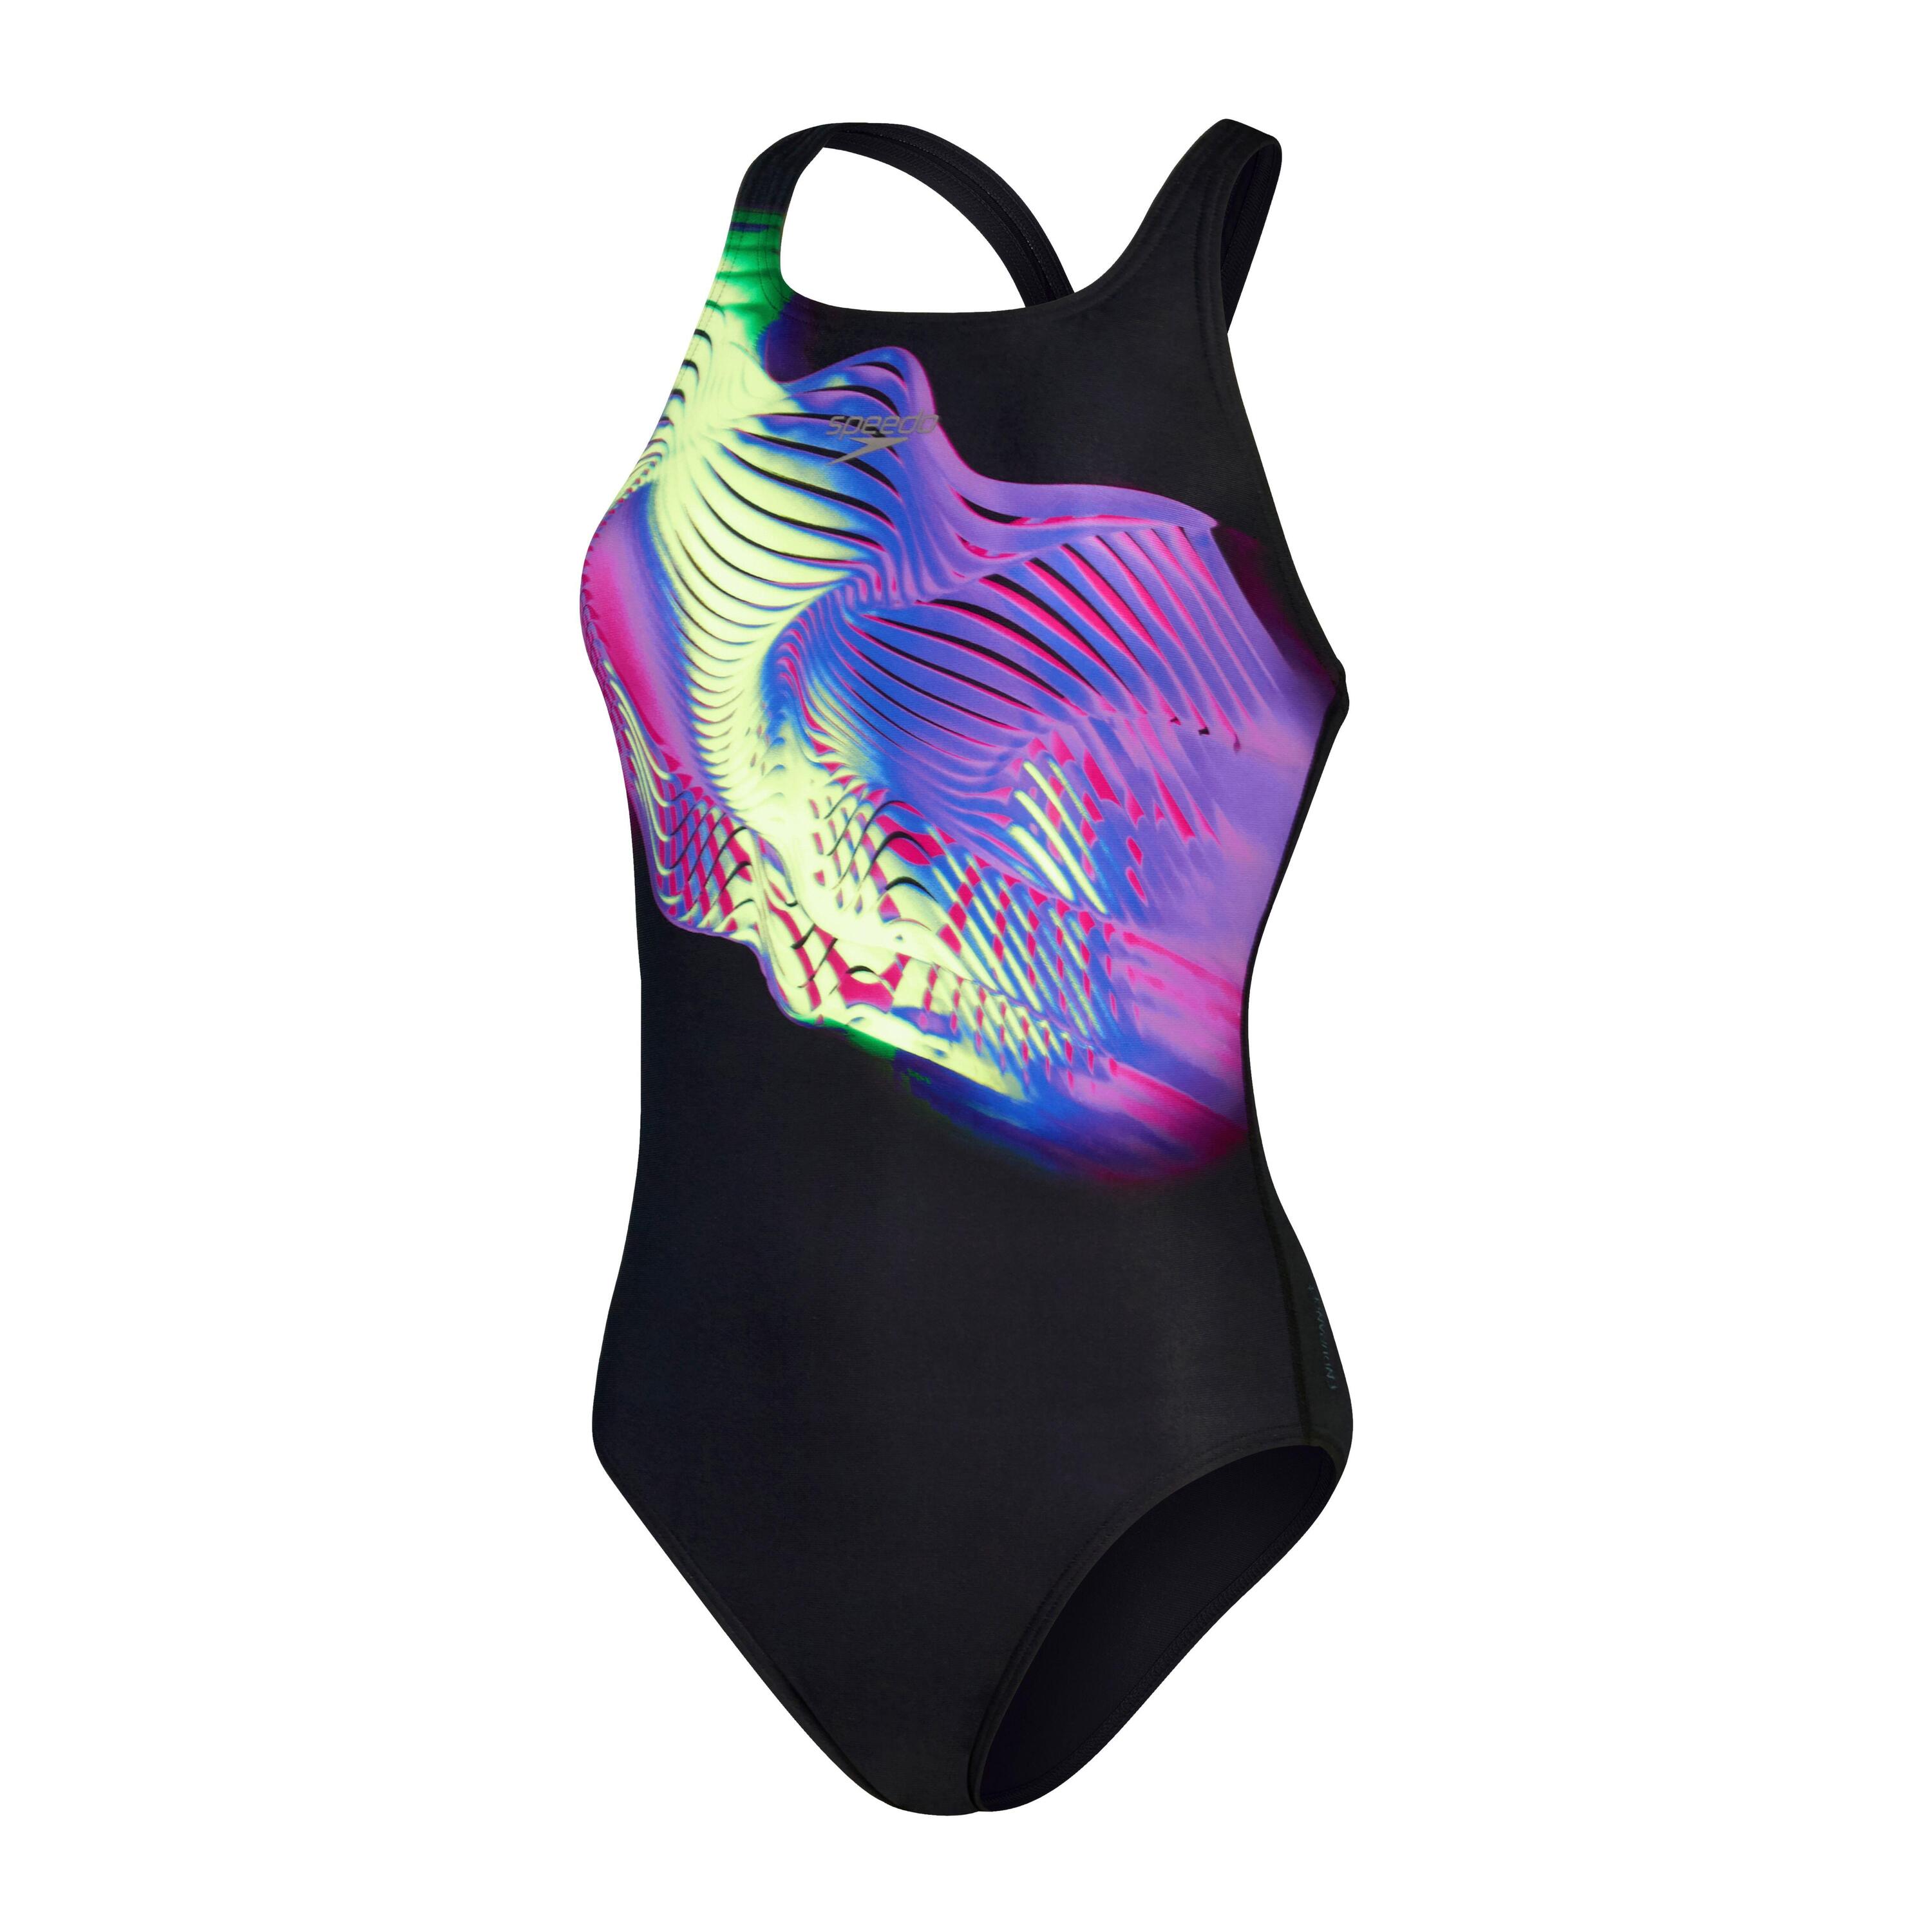 Speedo Placement Digital Medalist Swimsuit - Black/ Electric 7/7